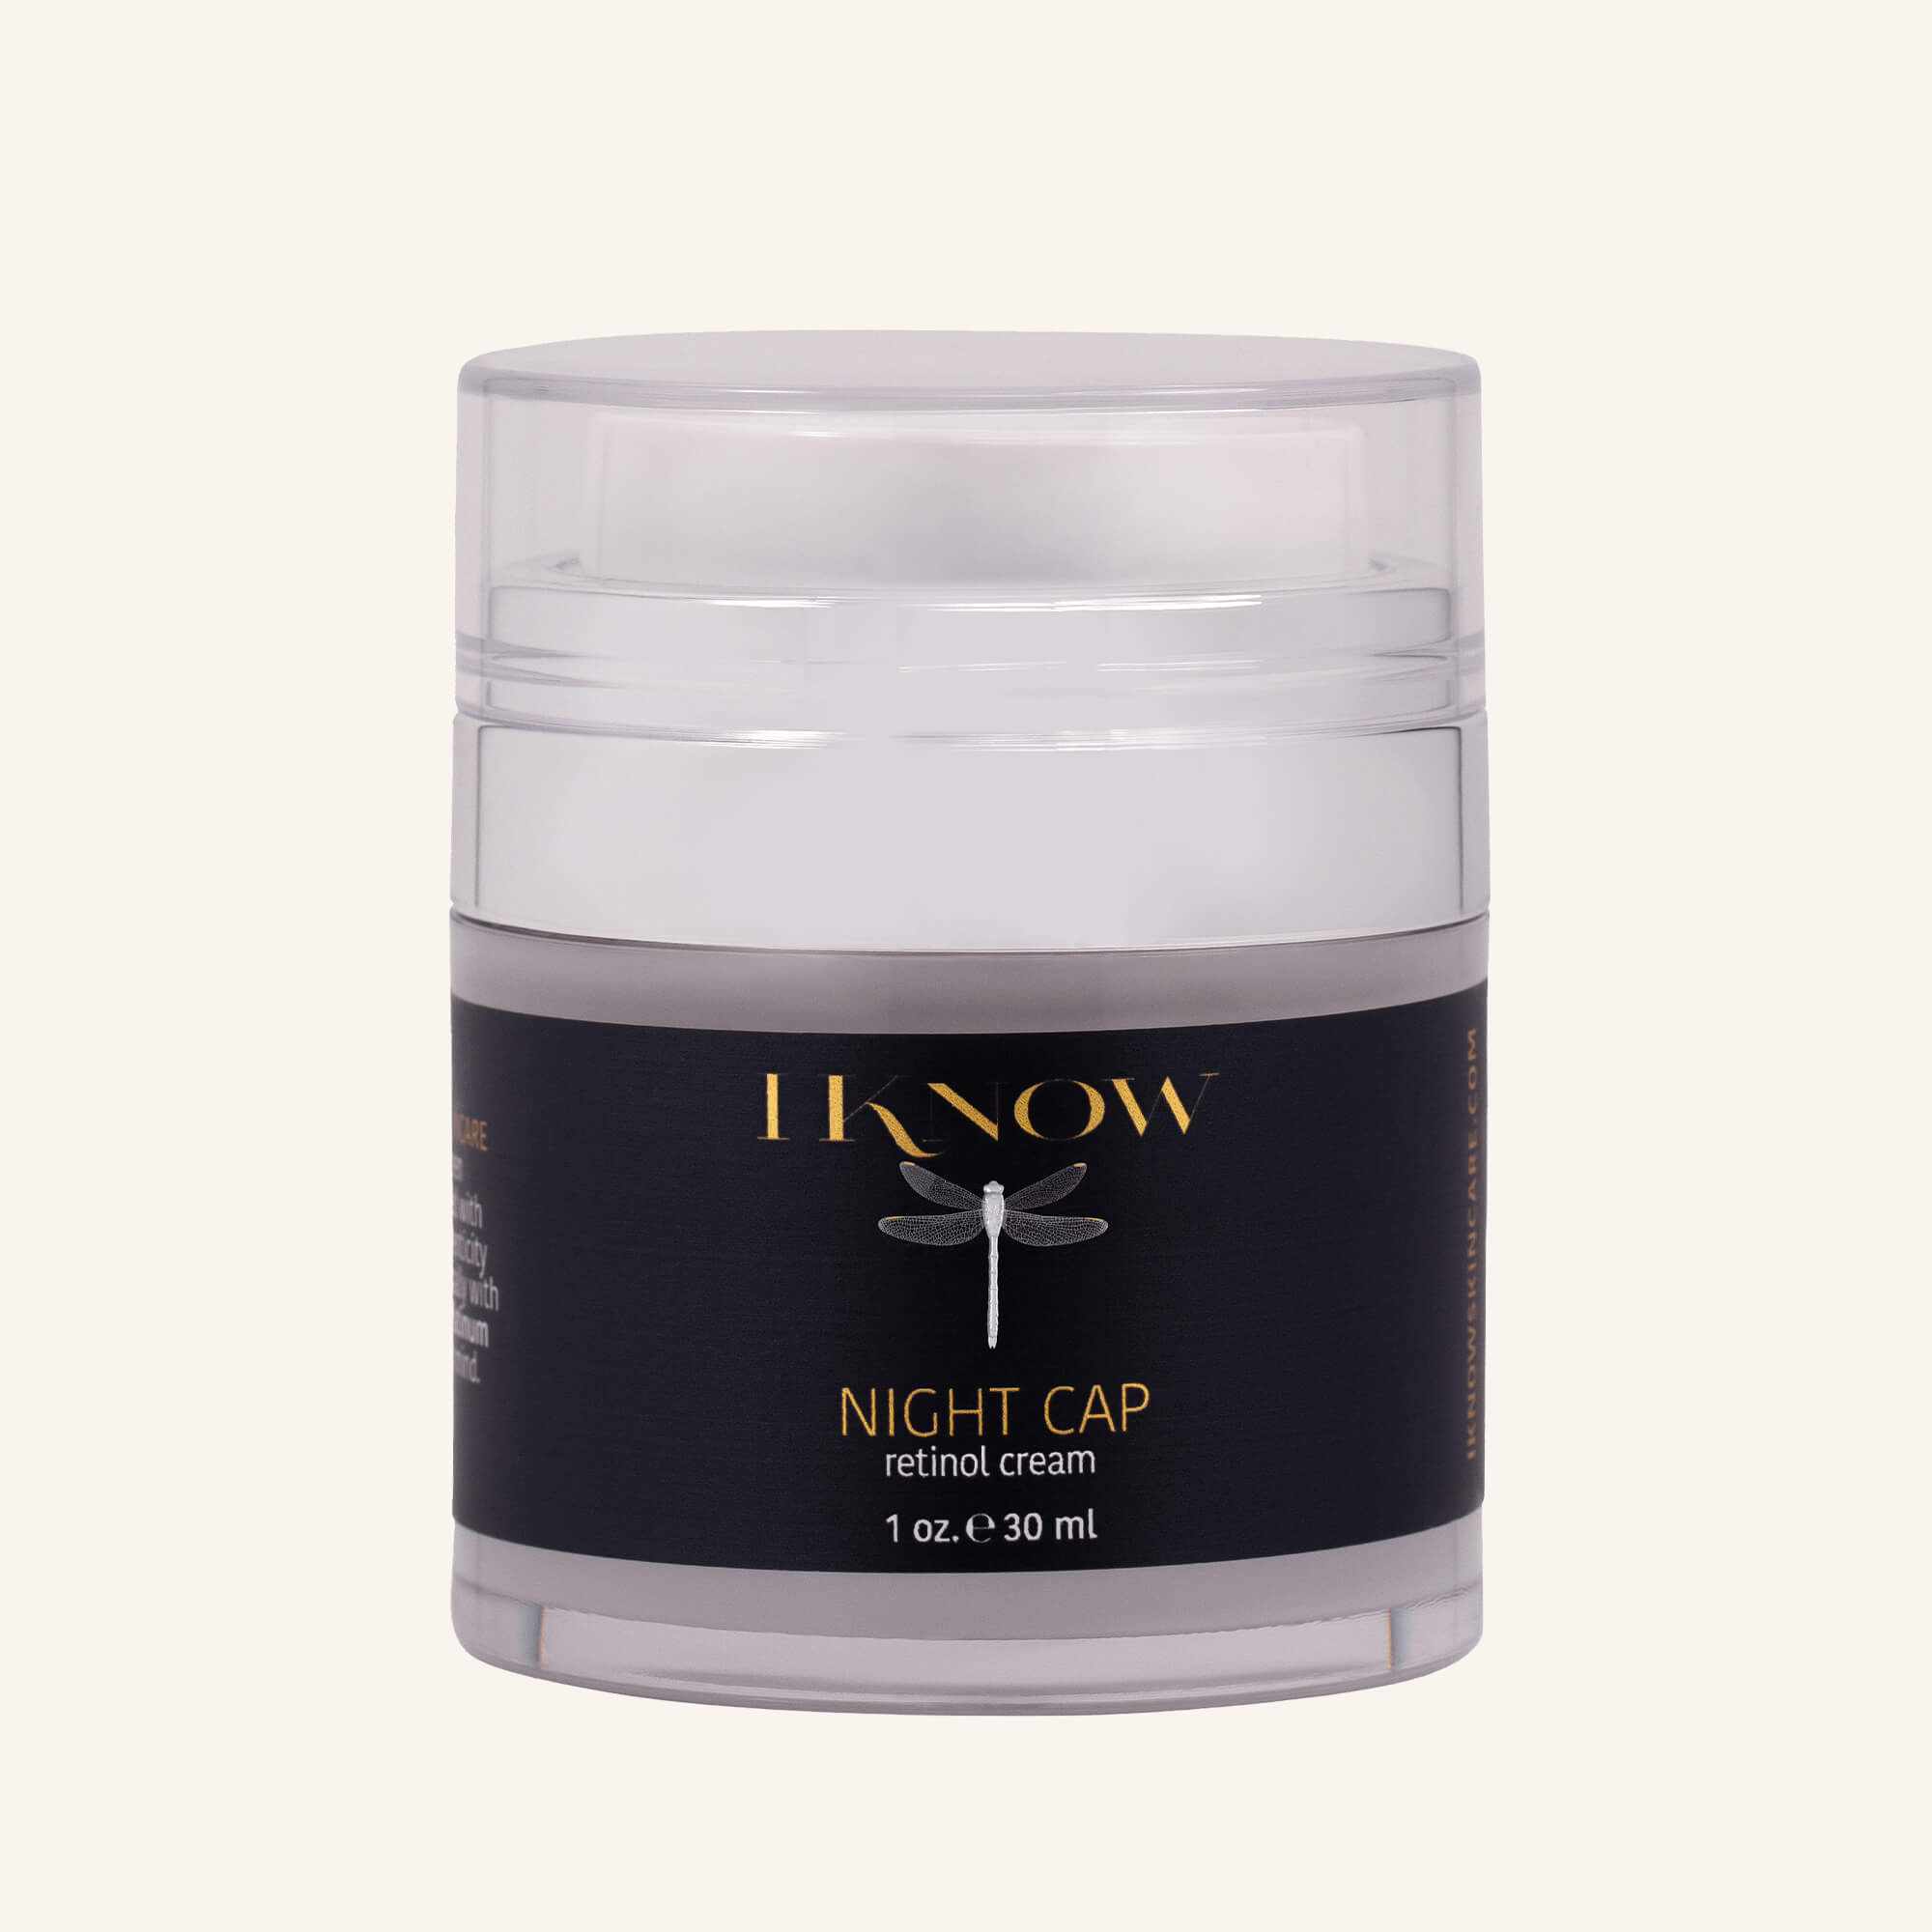 IKNOW Night Cap Retinol Moisturizing Cream softens wrinkles, brightens skin and boosts elasticity class=